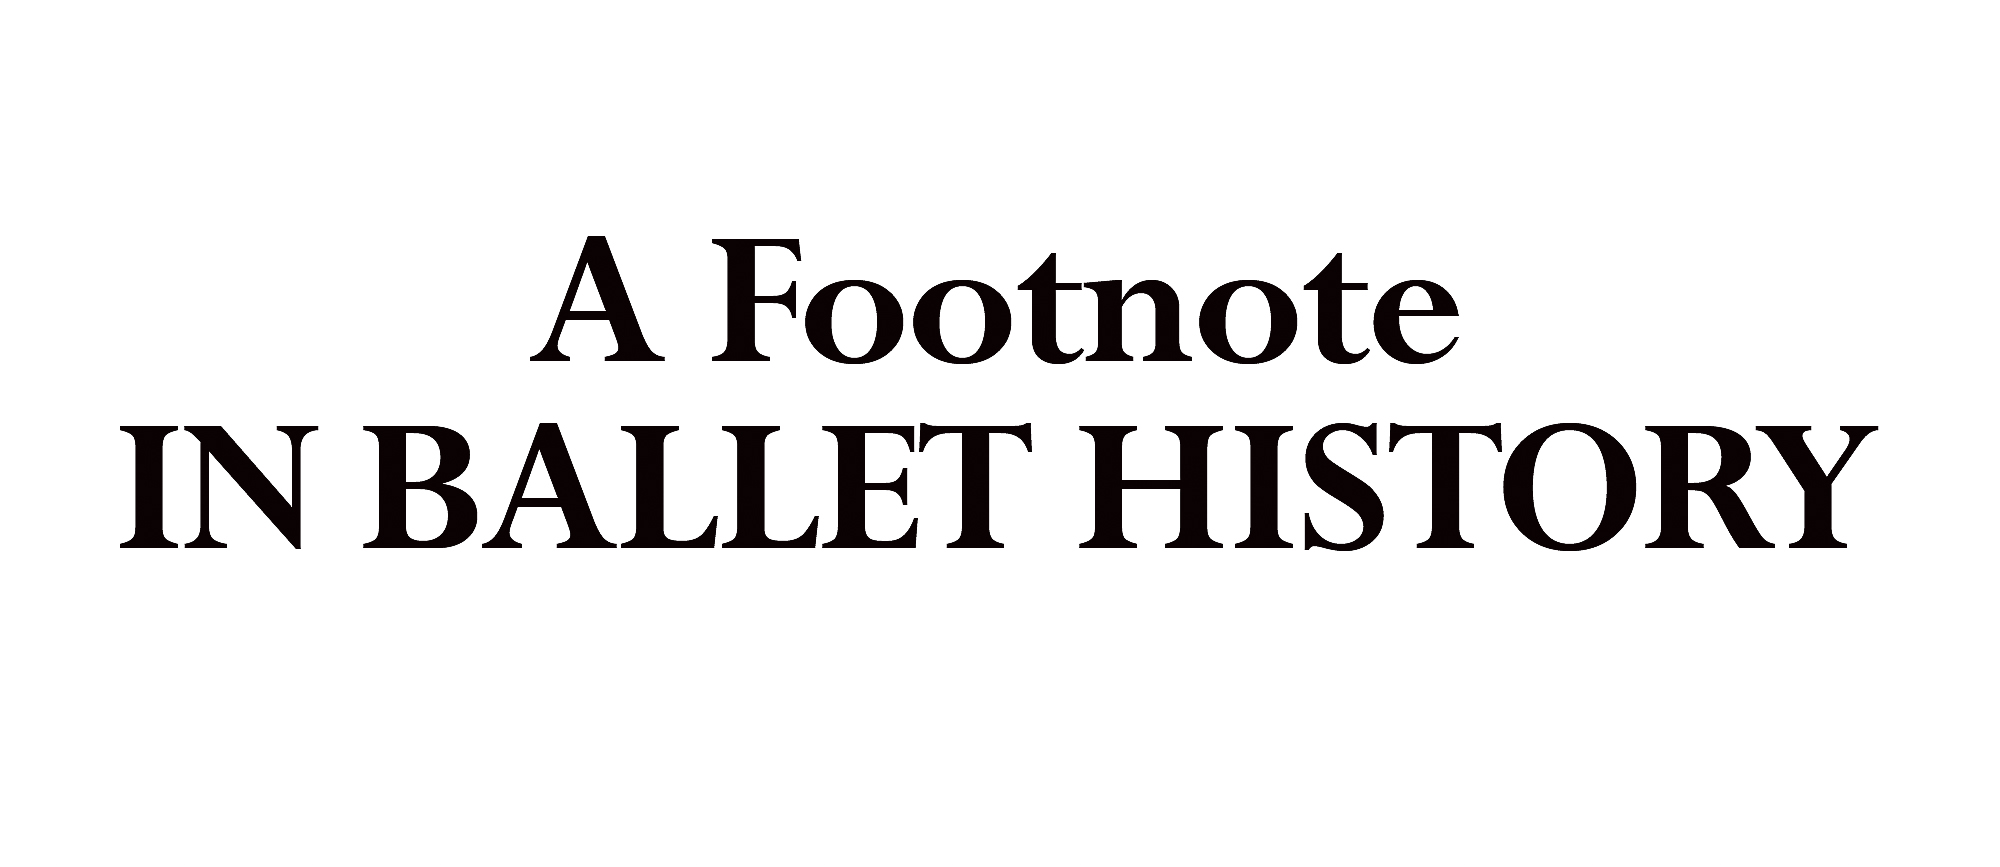 footnoteball